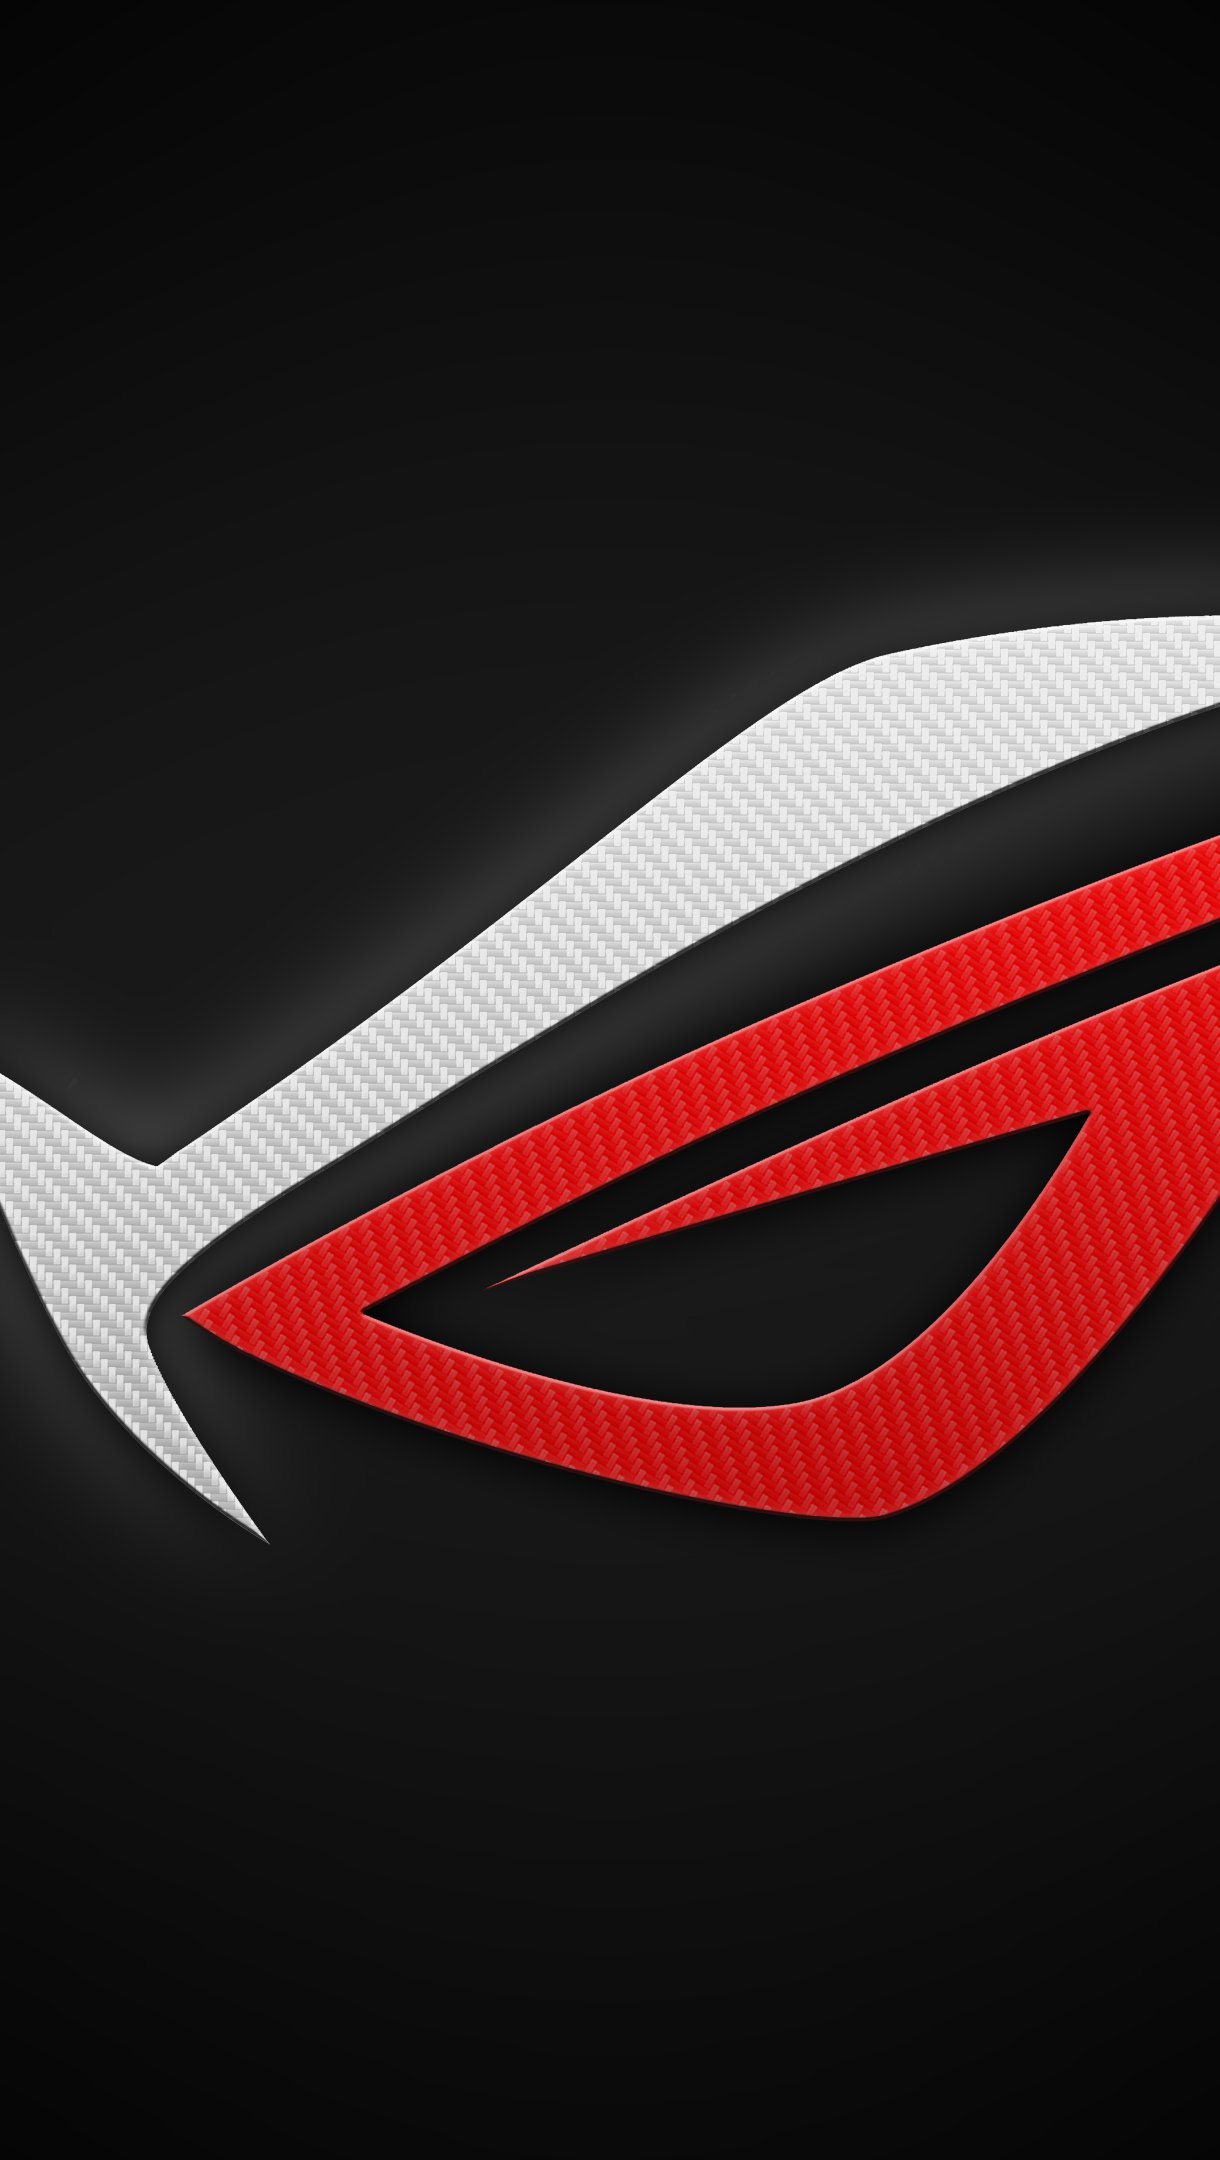 Fondos de pantalla Asus ROG Republic of Gamers Logo Vertical